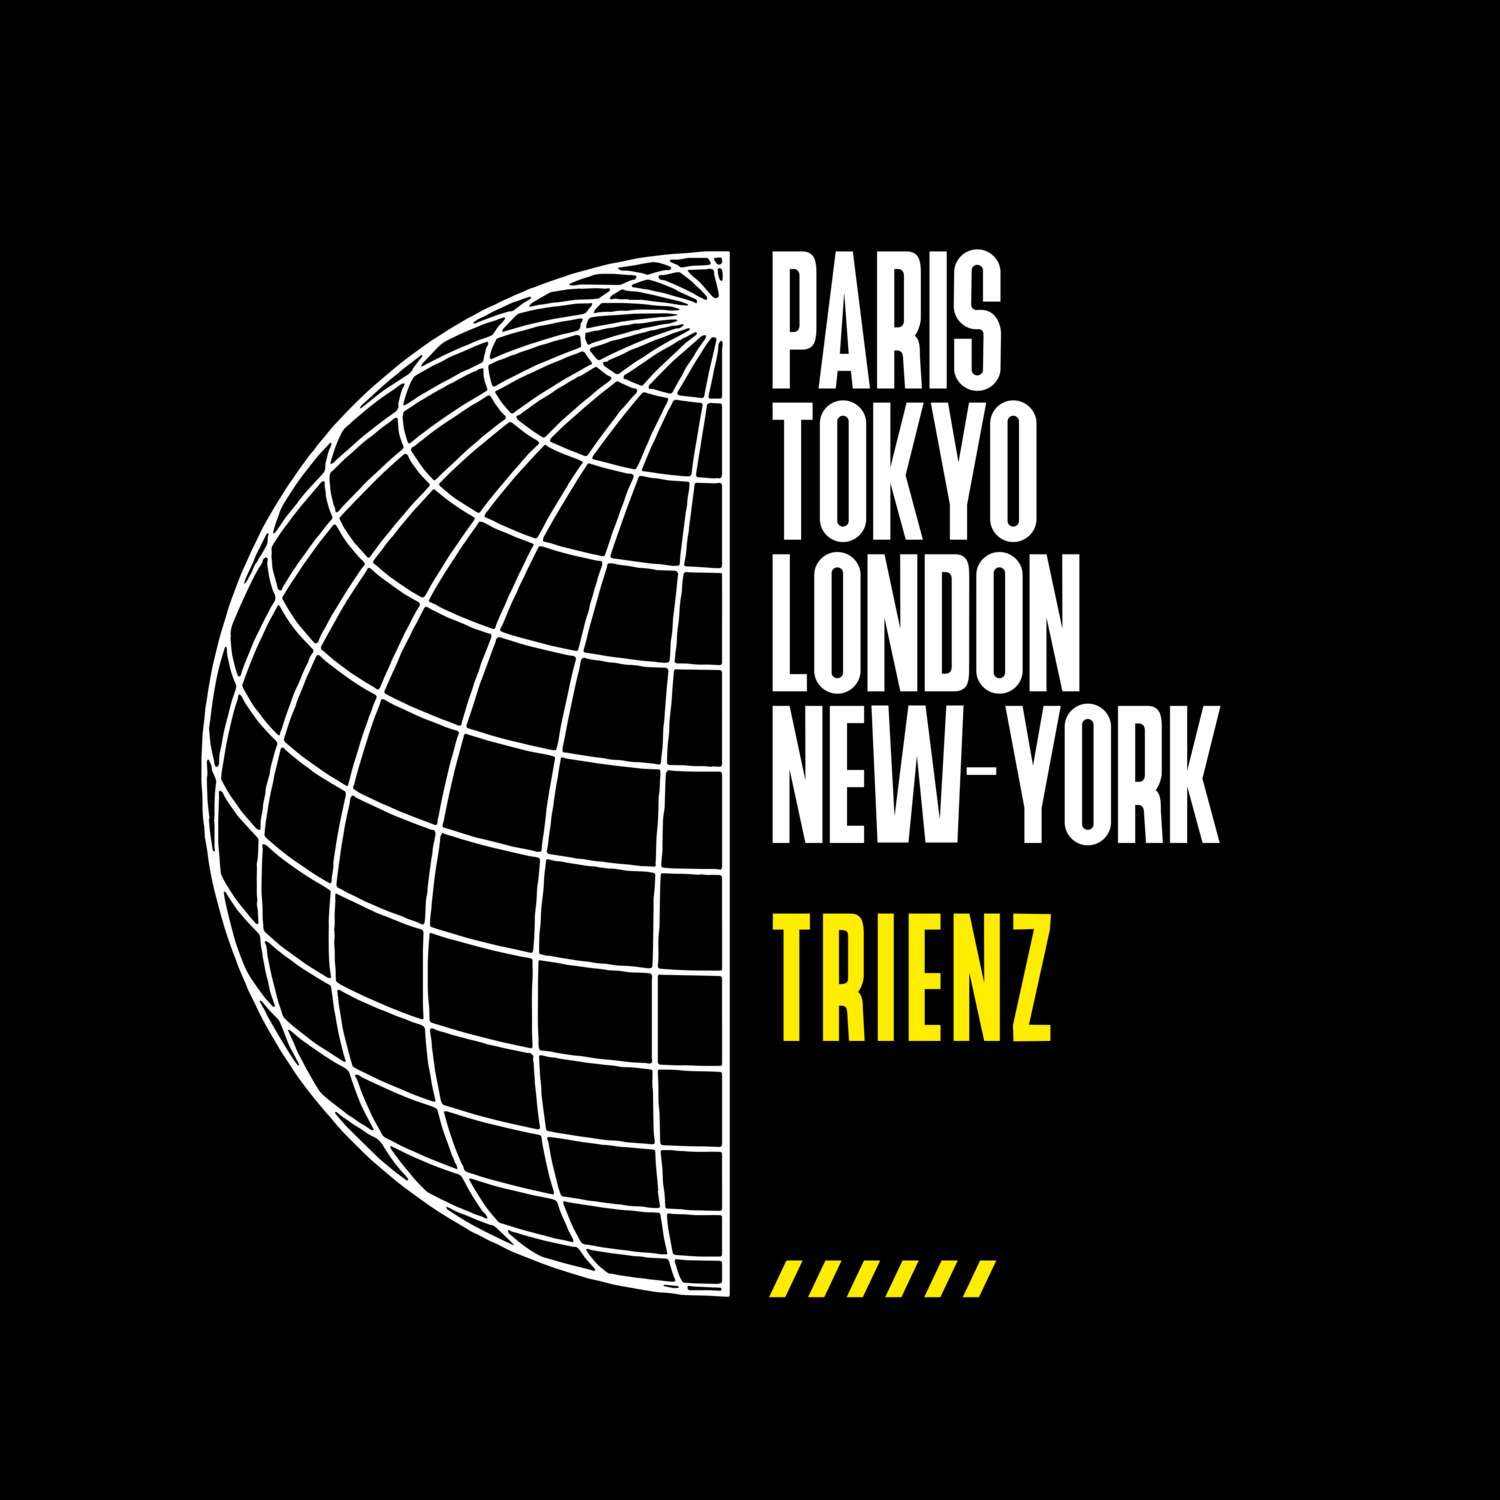 Trienz T-Shirt »Paris Tokyo London«